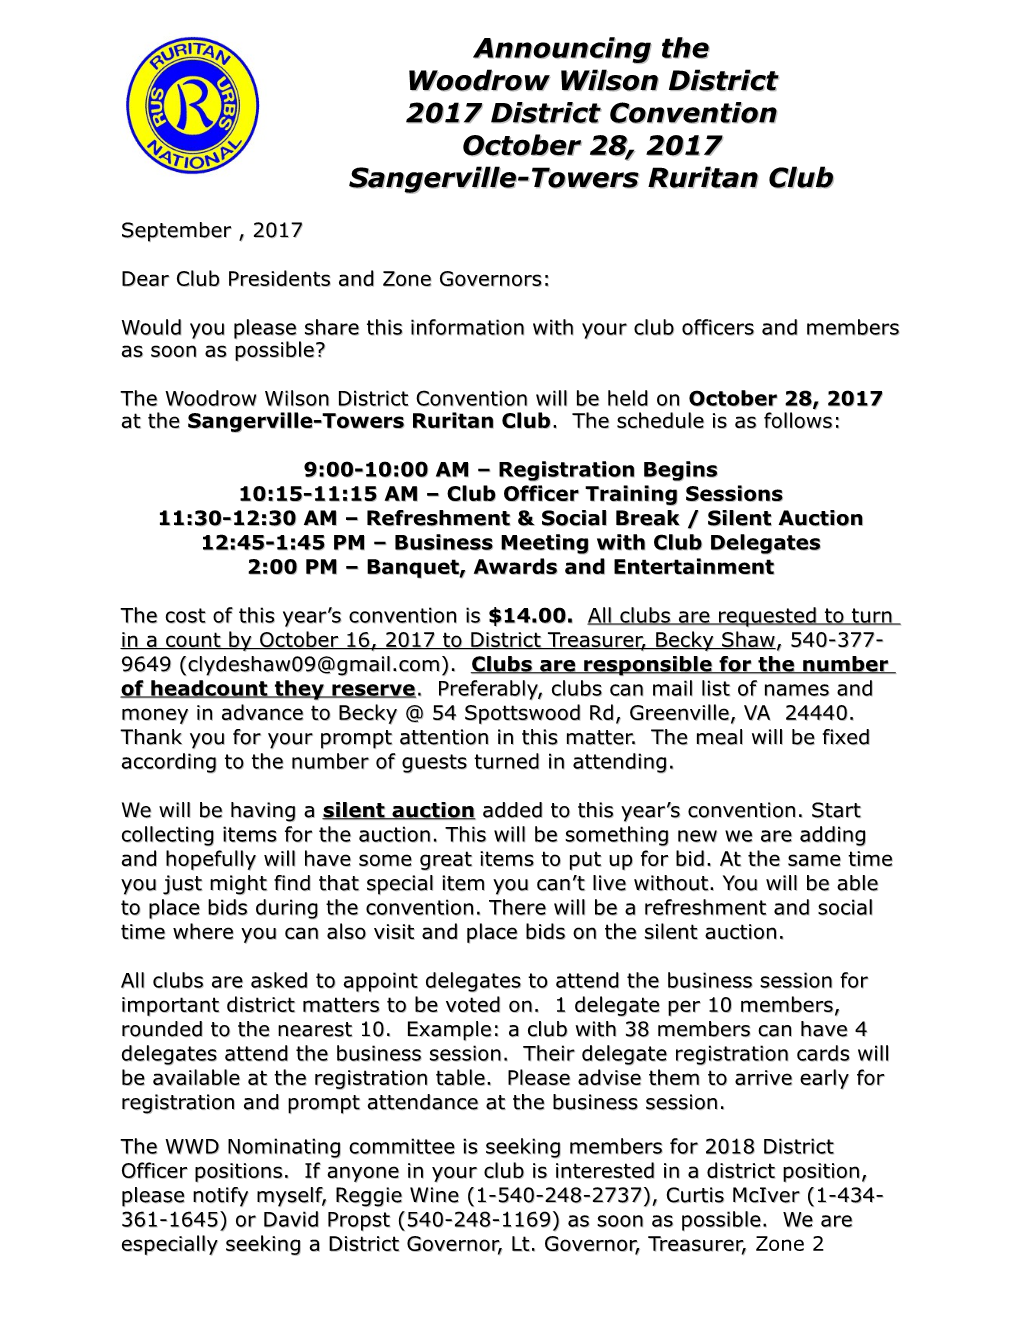 Sangerville-Towers Ruritan Club